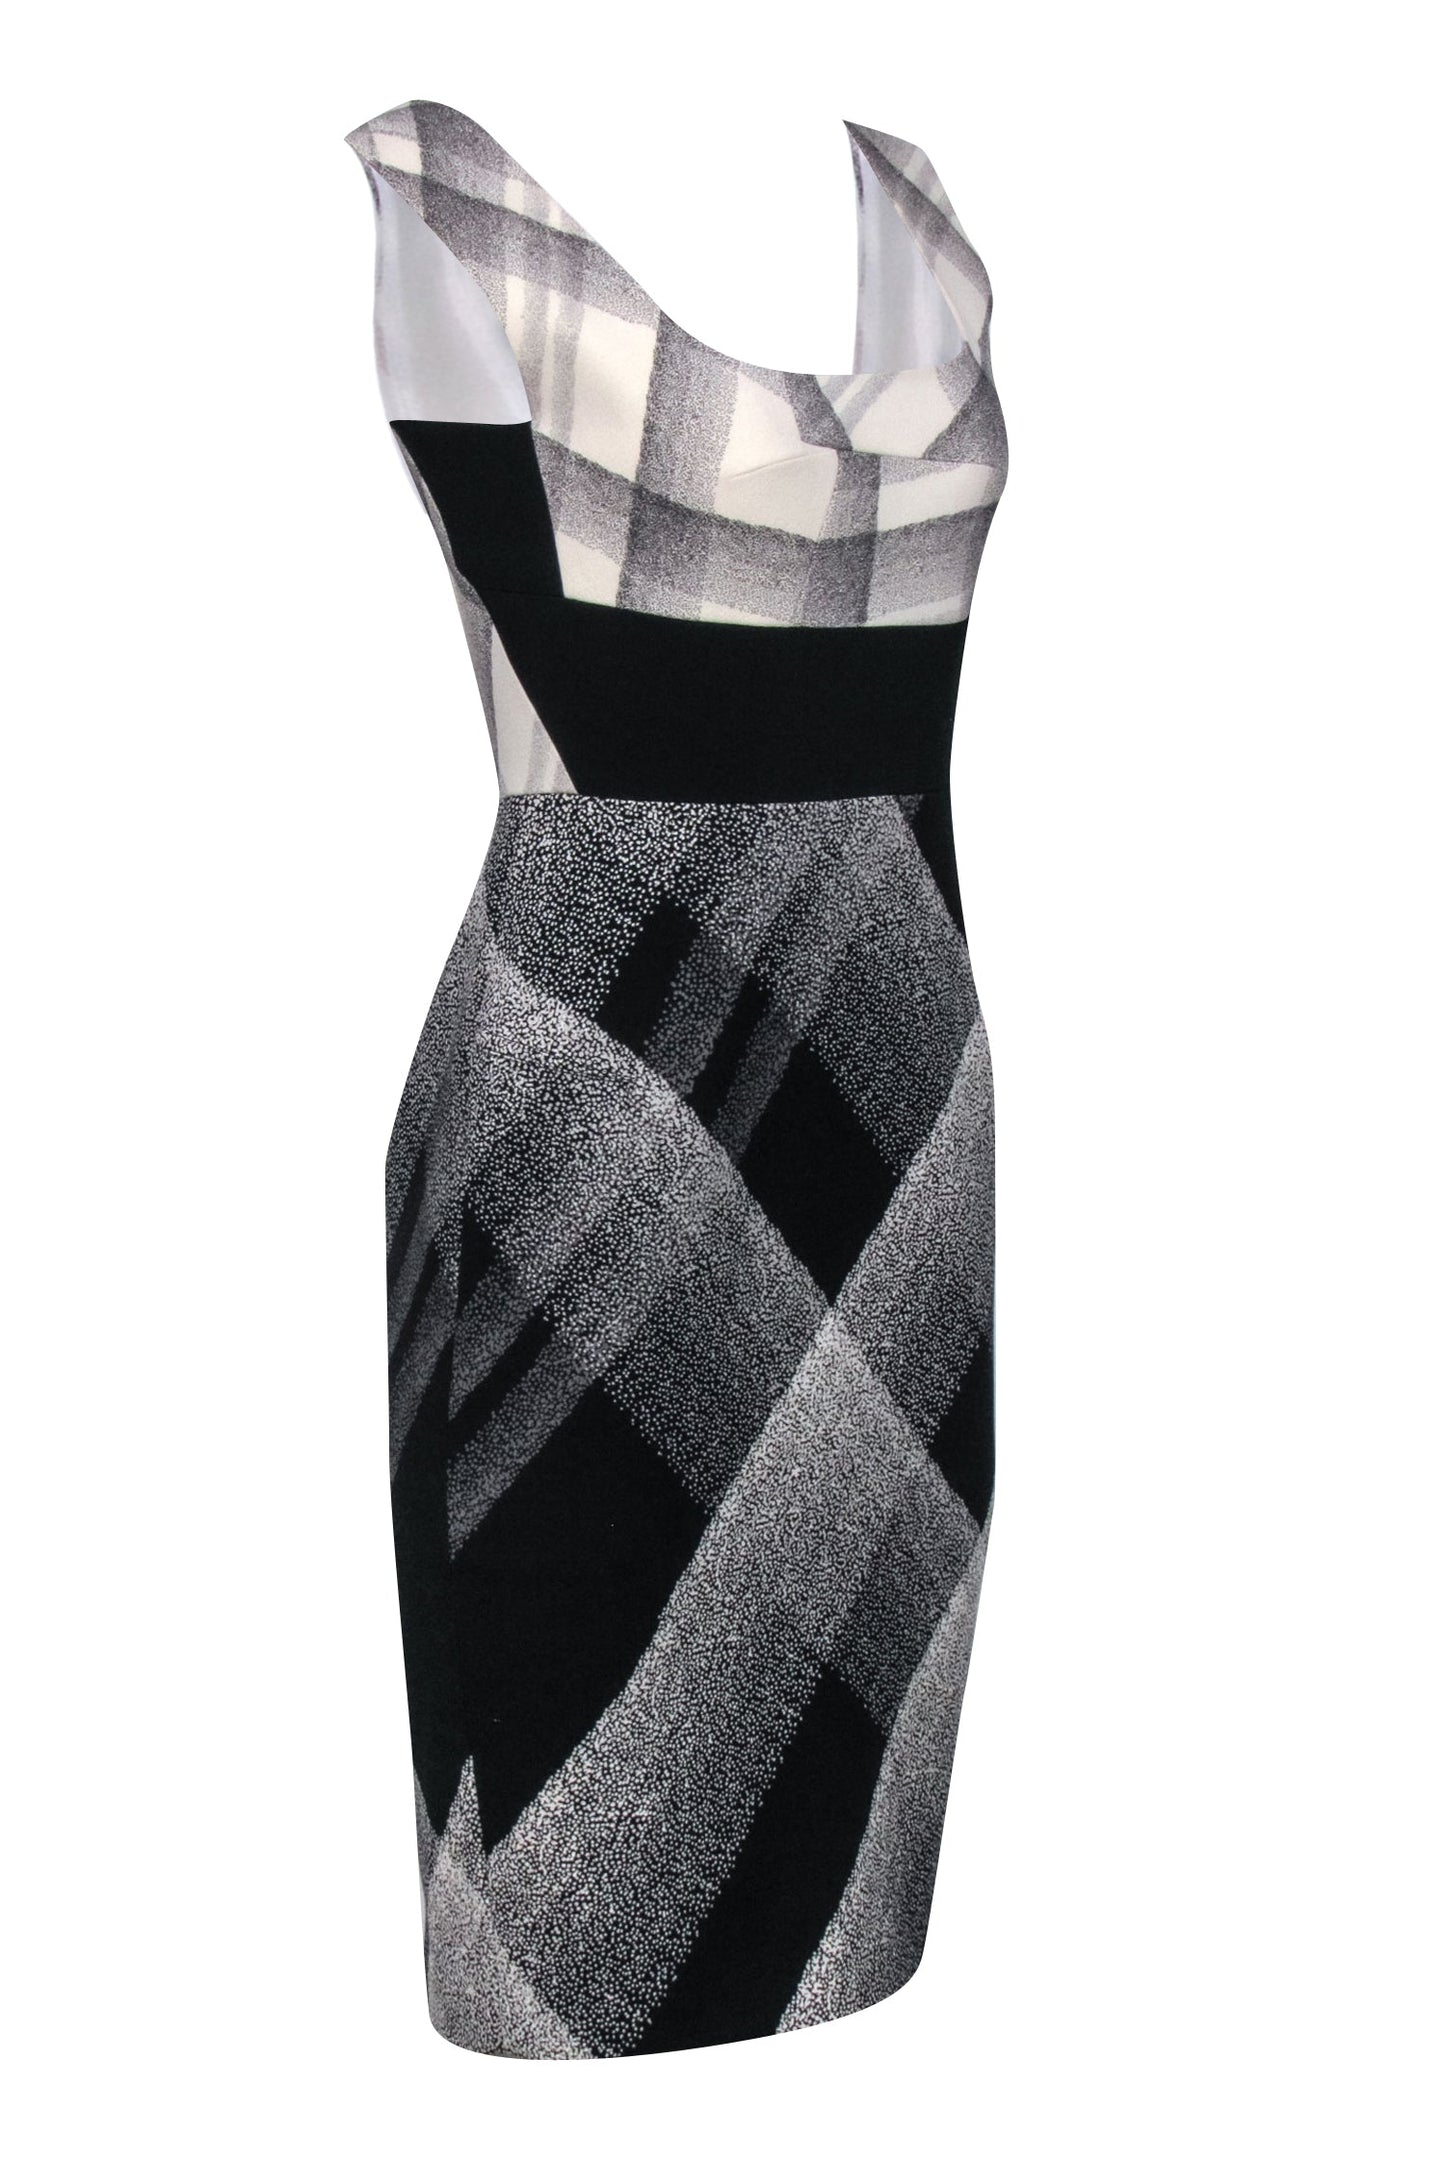 Roland Mouret - Black & Ivory Diffused Check Print Arabella Dress Sz 8